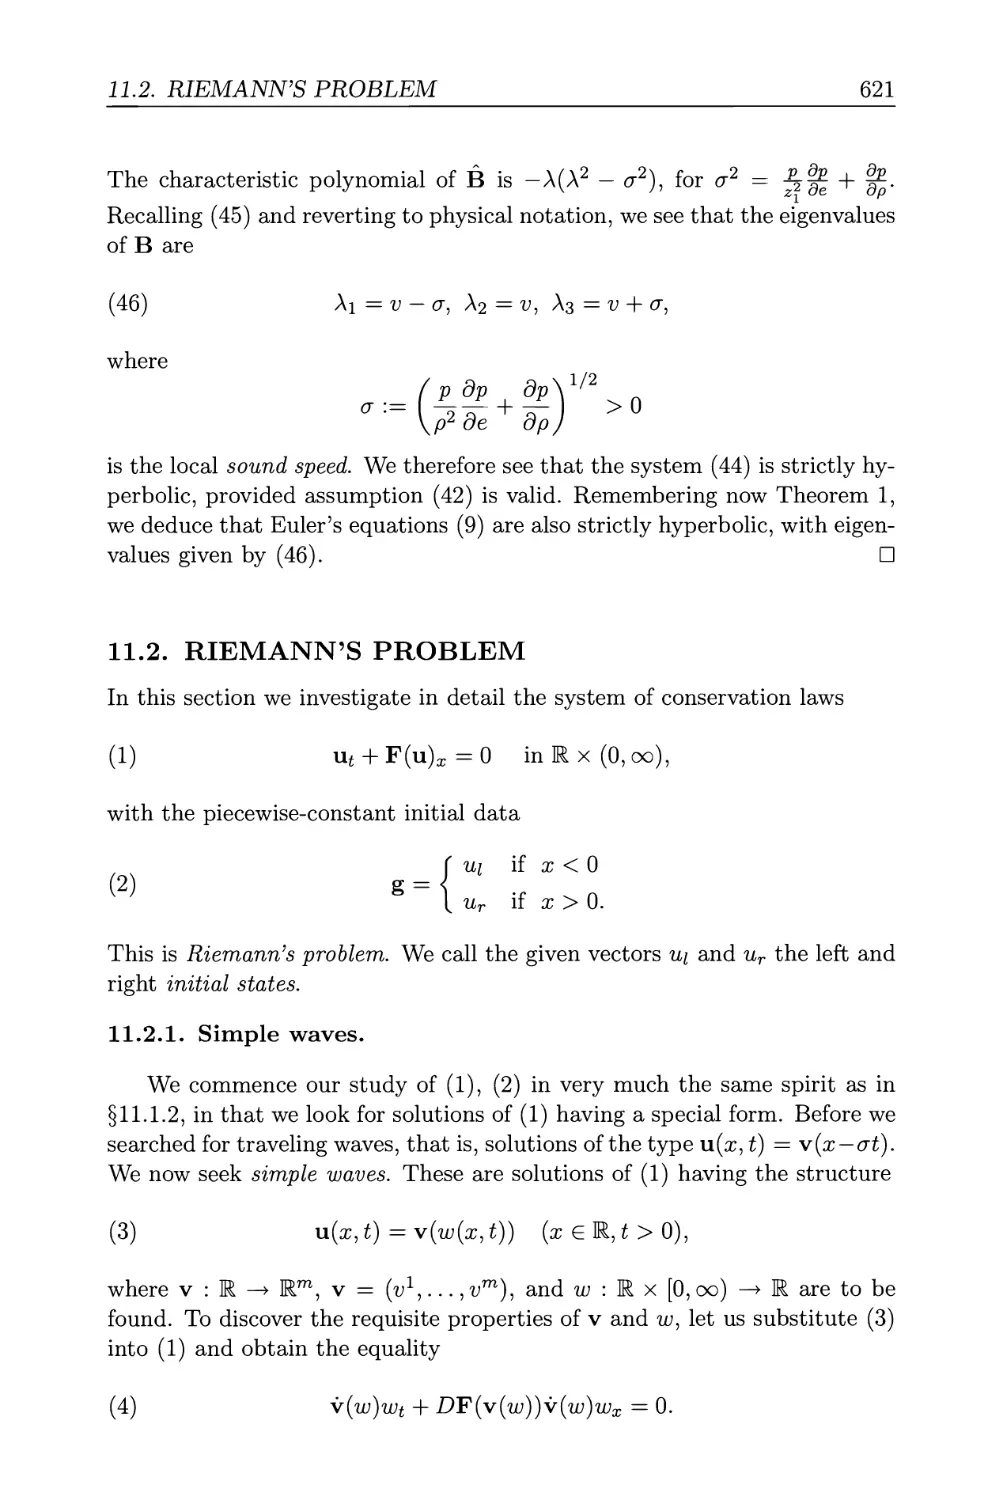 11.2. Riemann's problem